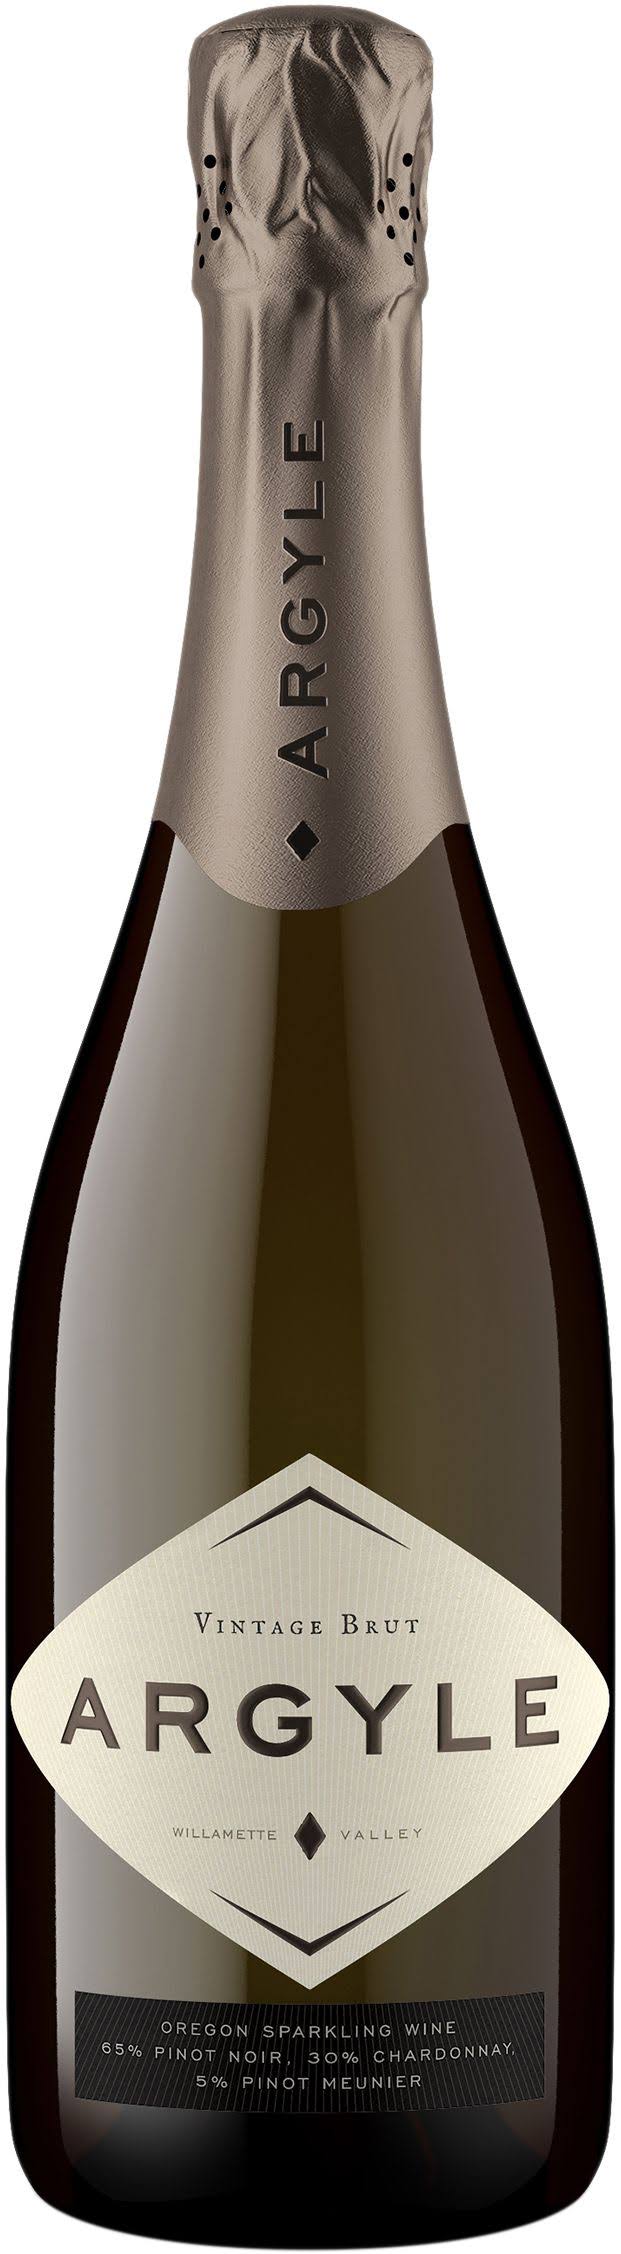 Argyle Brut Oregon Sparkling Wine - 750ml